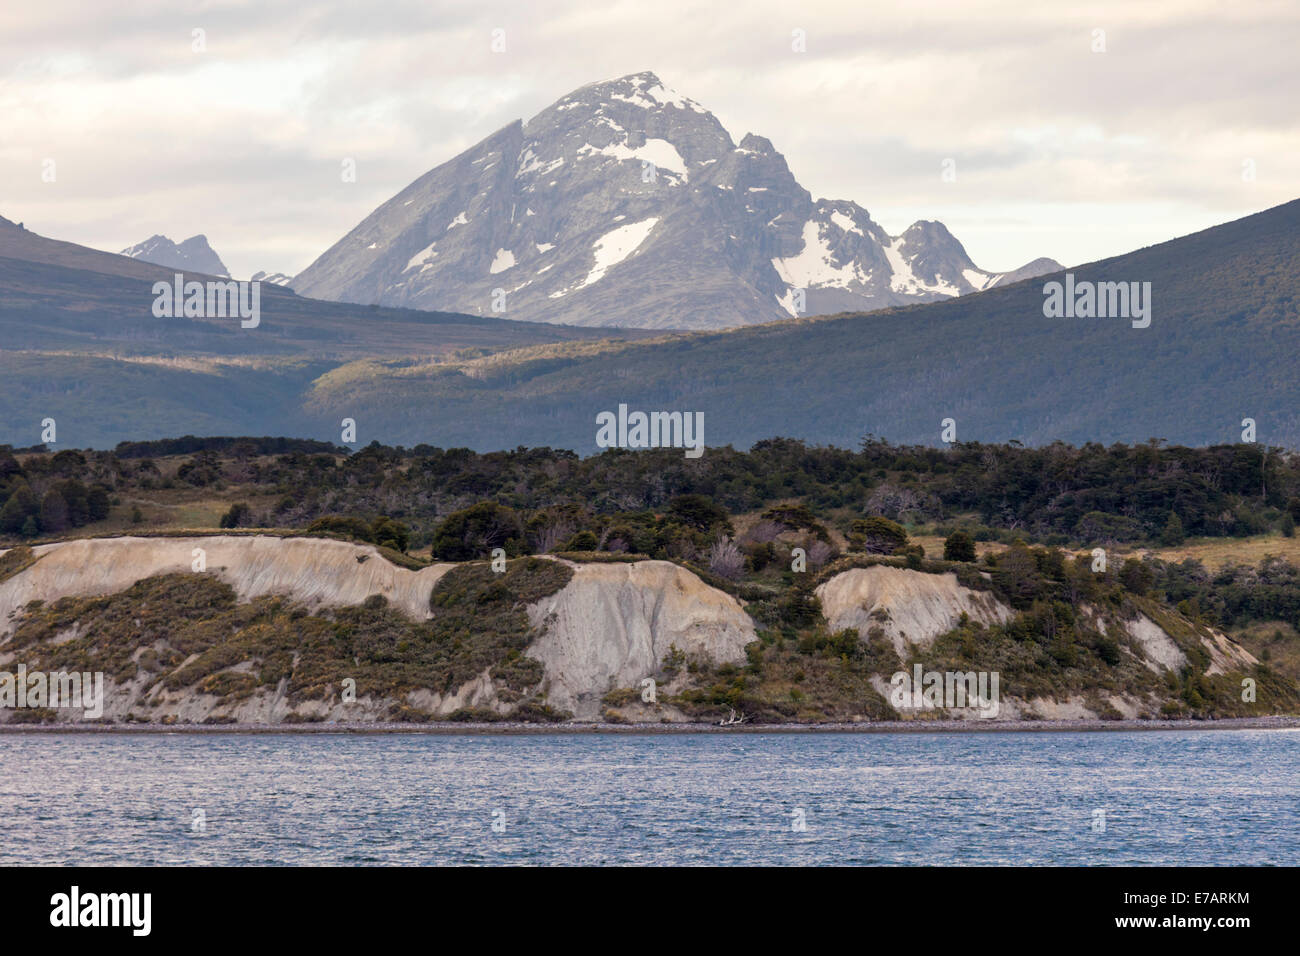 A view of mountaintop from the Beagle Channel, near Ushuaia, Tierra del Fuego, Antártida e Islas del Atlántico Sur Province, Argentina Stock Photo